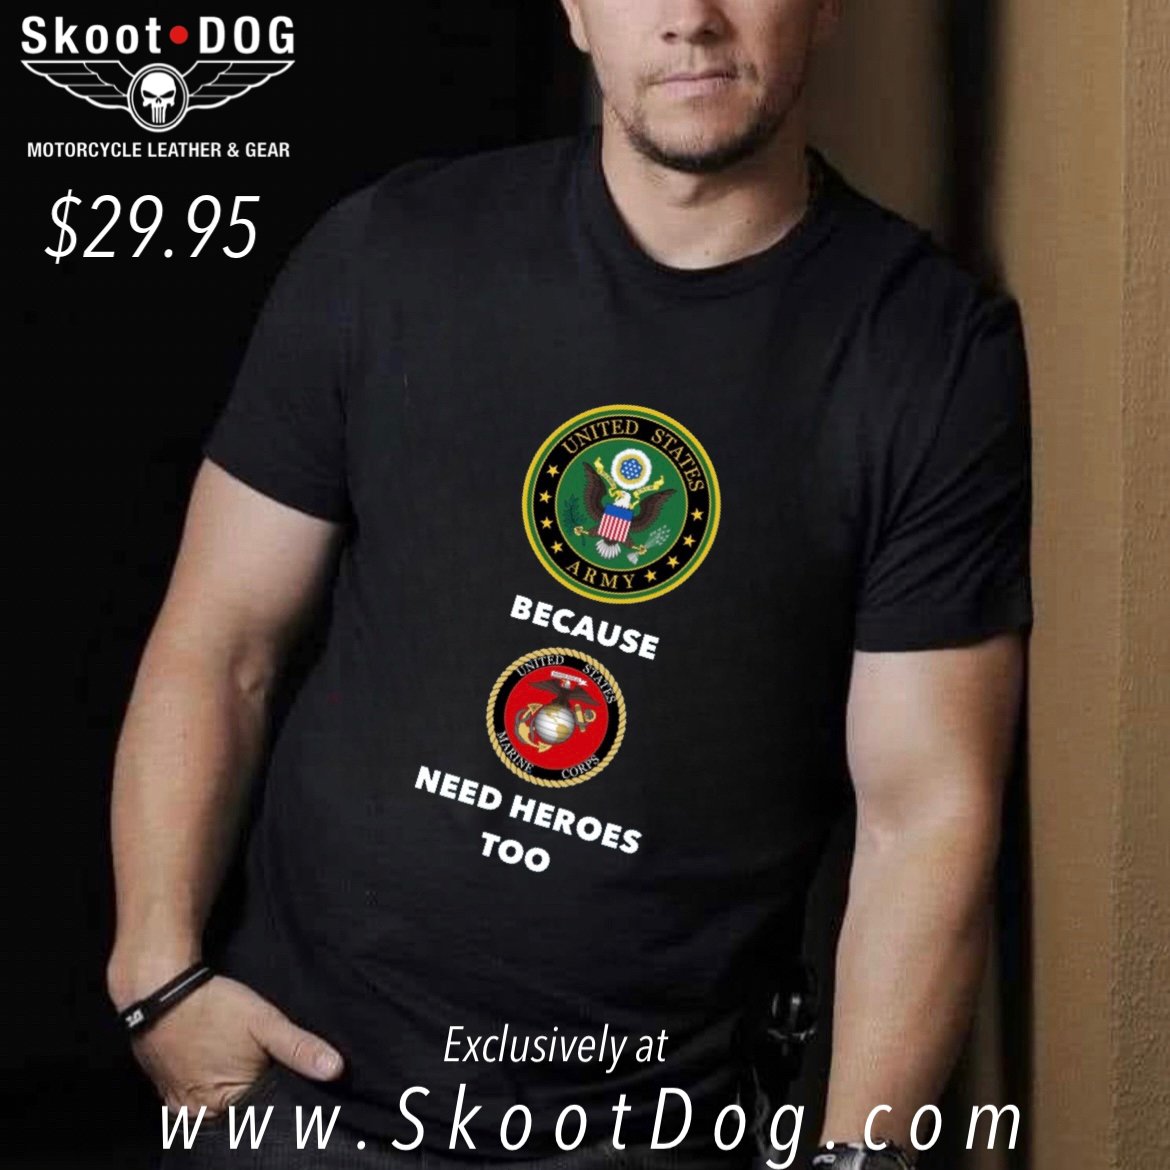 Marine’s Heroes - Skootdog.com